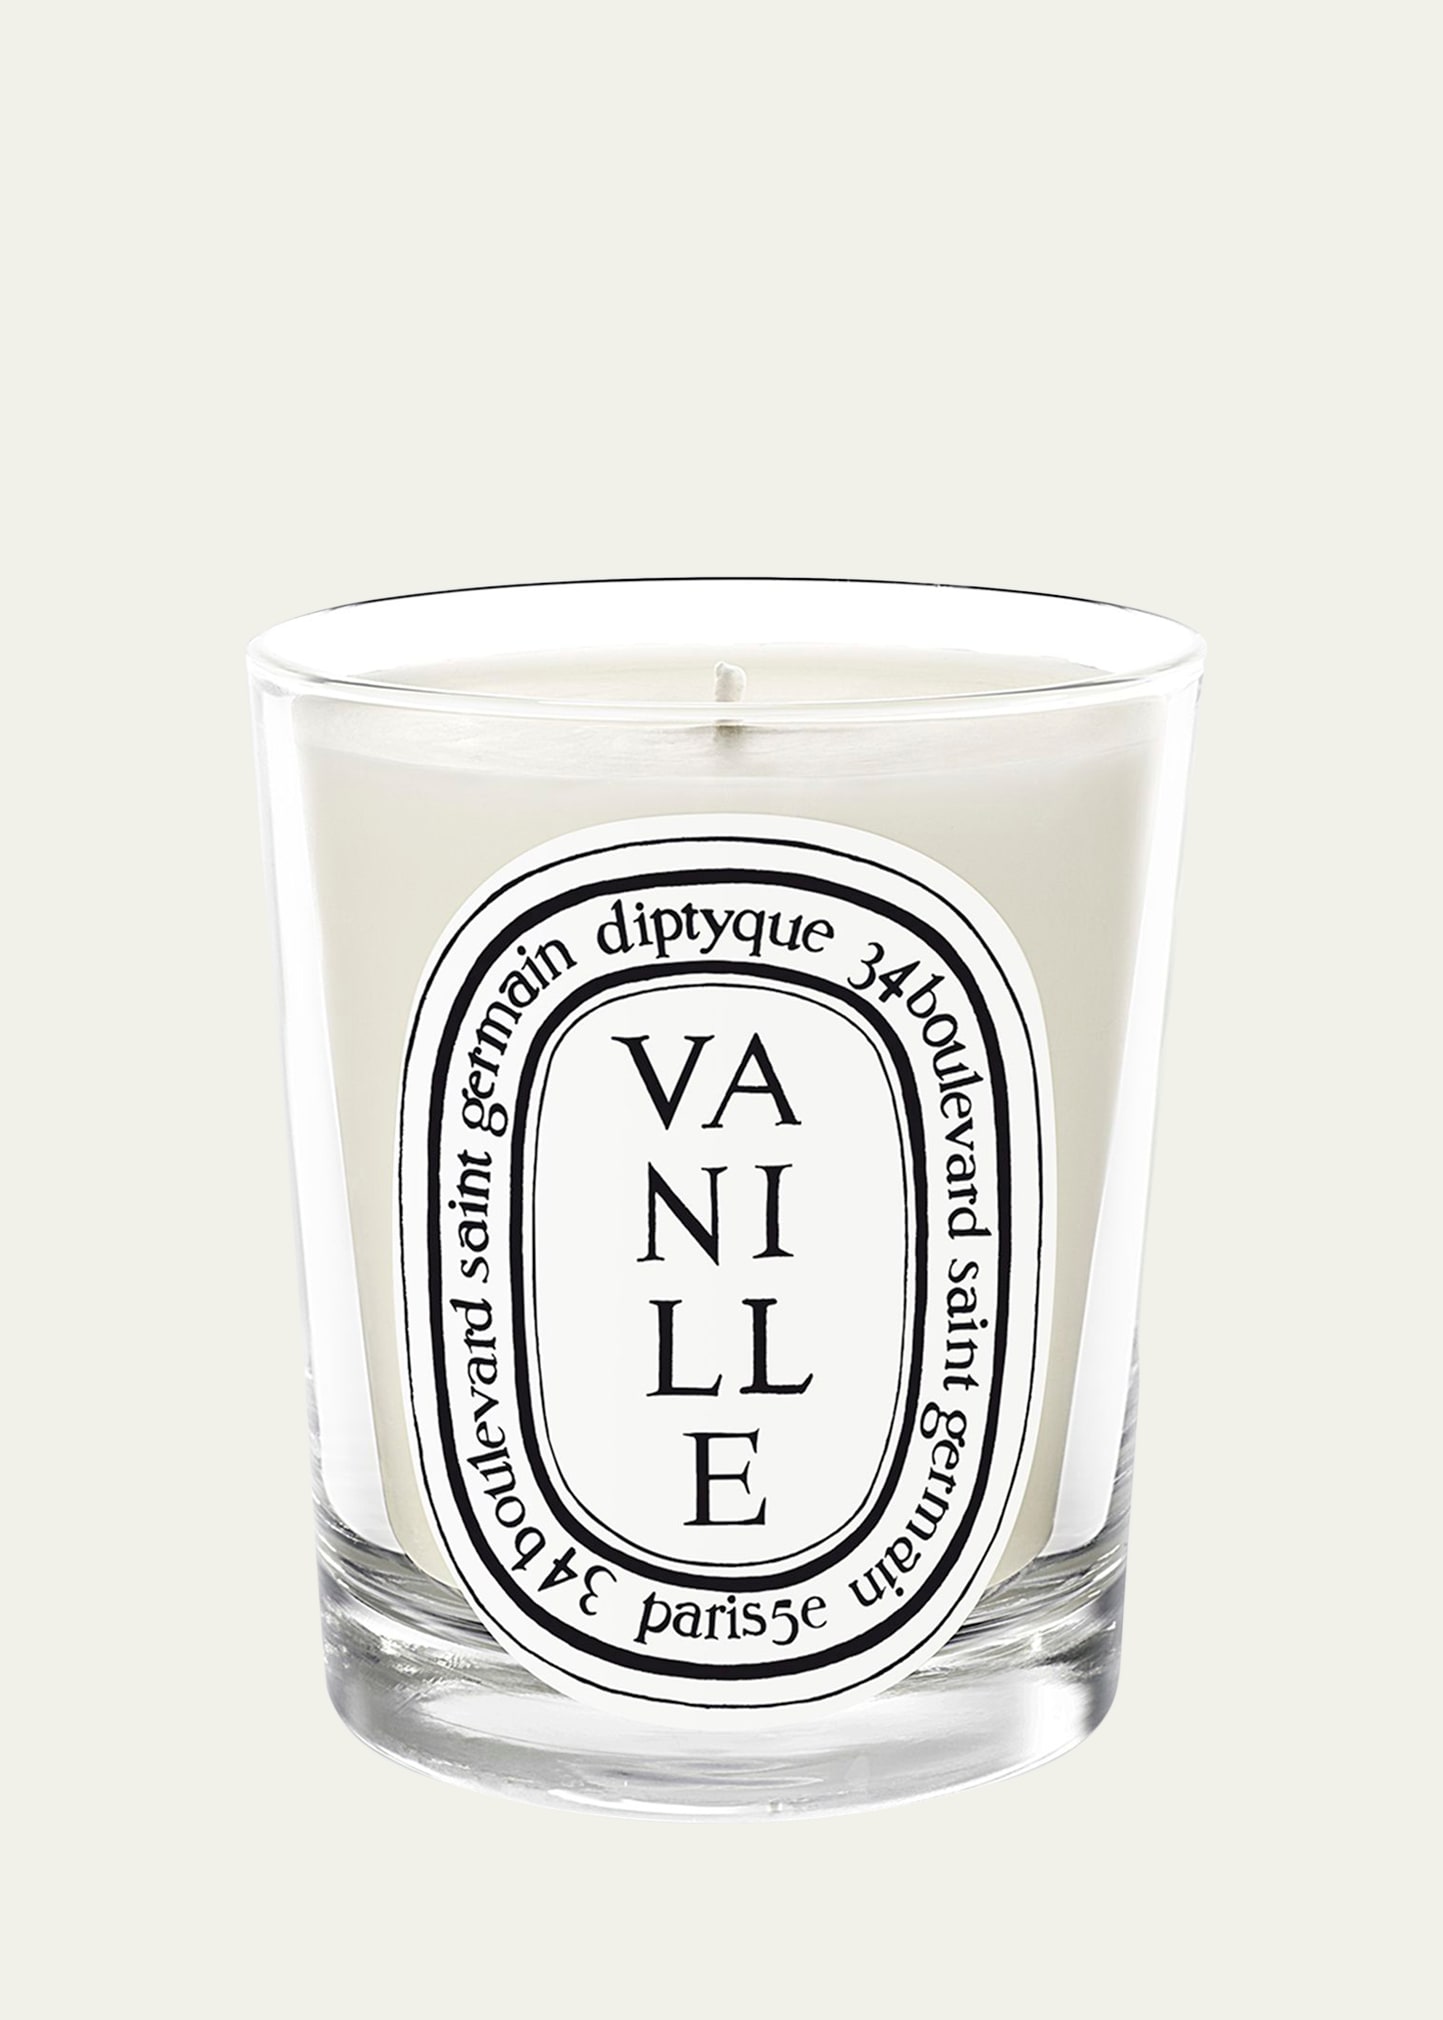 DIPTYQUE Vanille (Vanilla) Scented Candle, 6.5 oz.